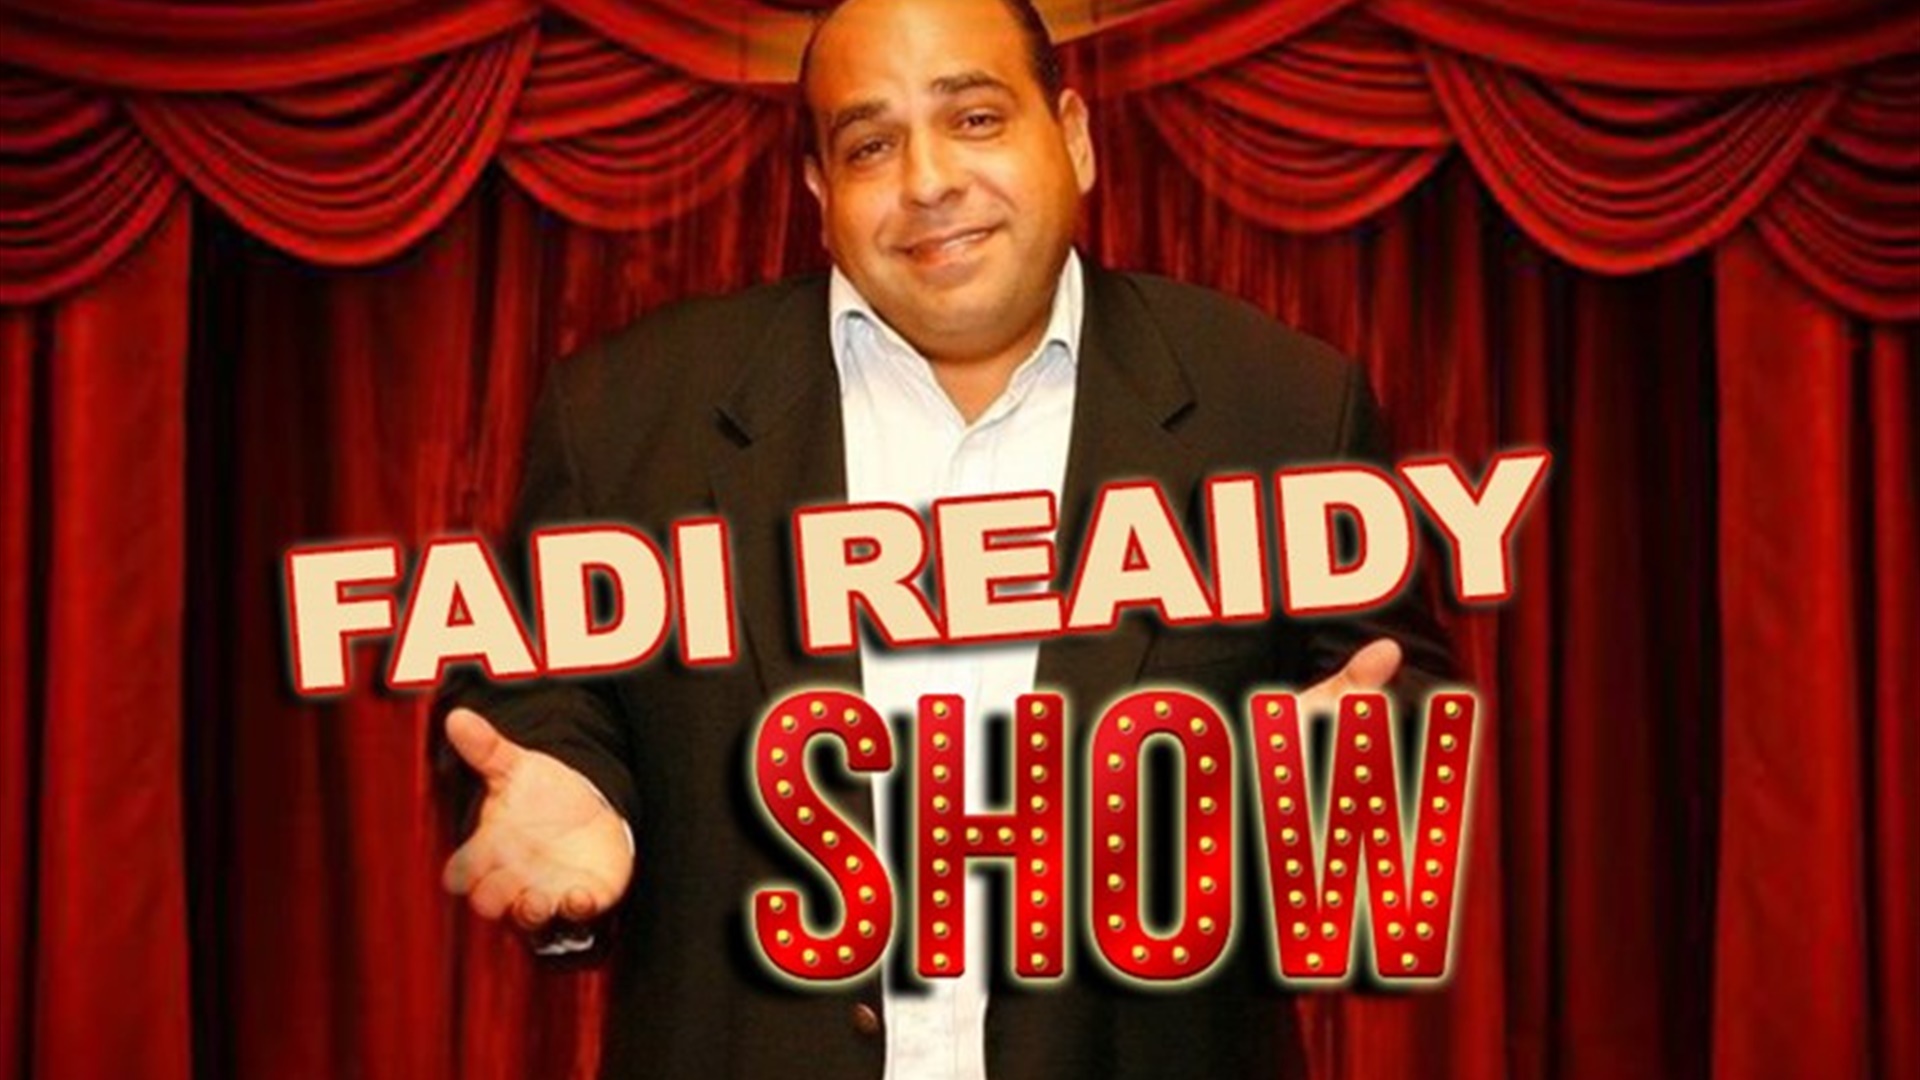 The Fadi Reaidy Show